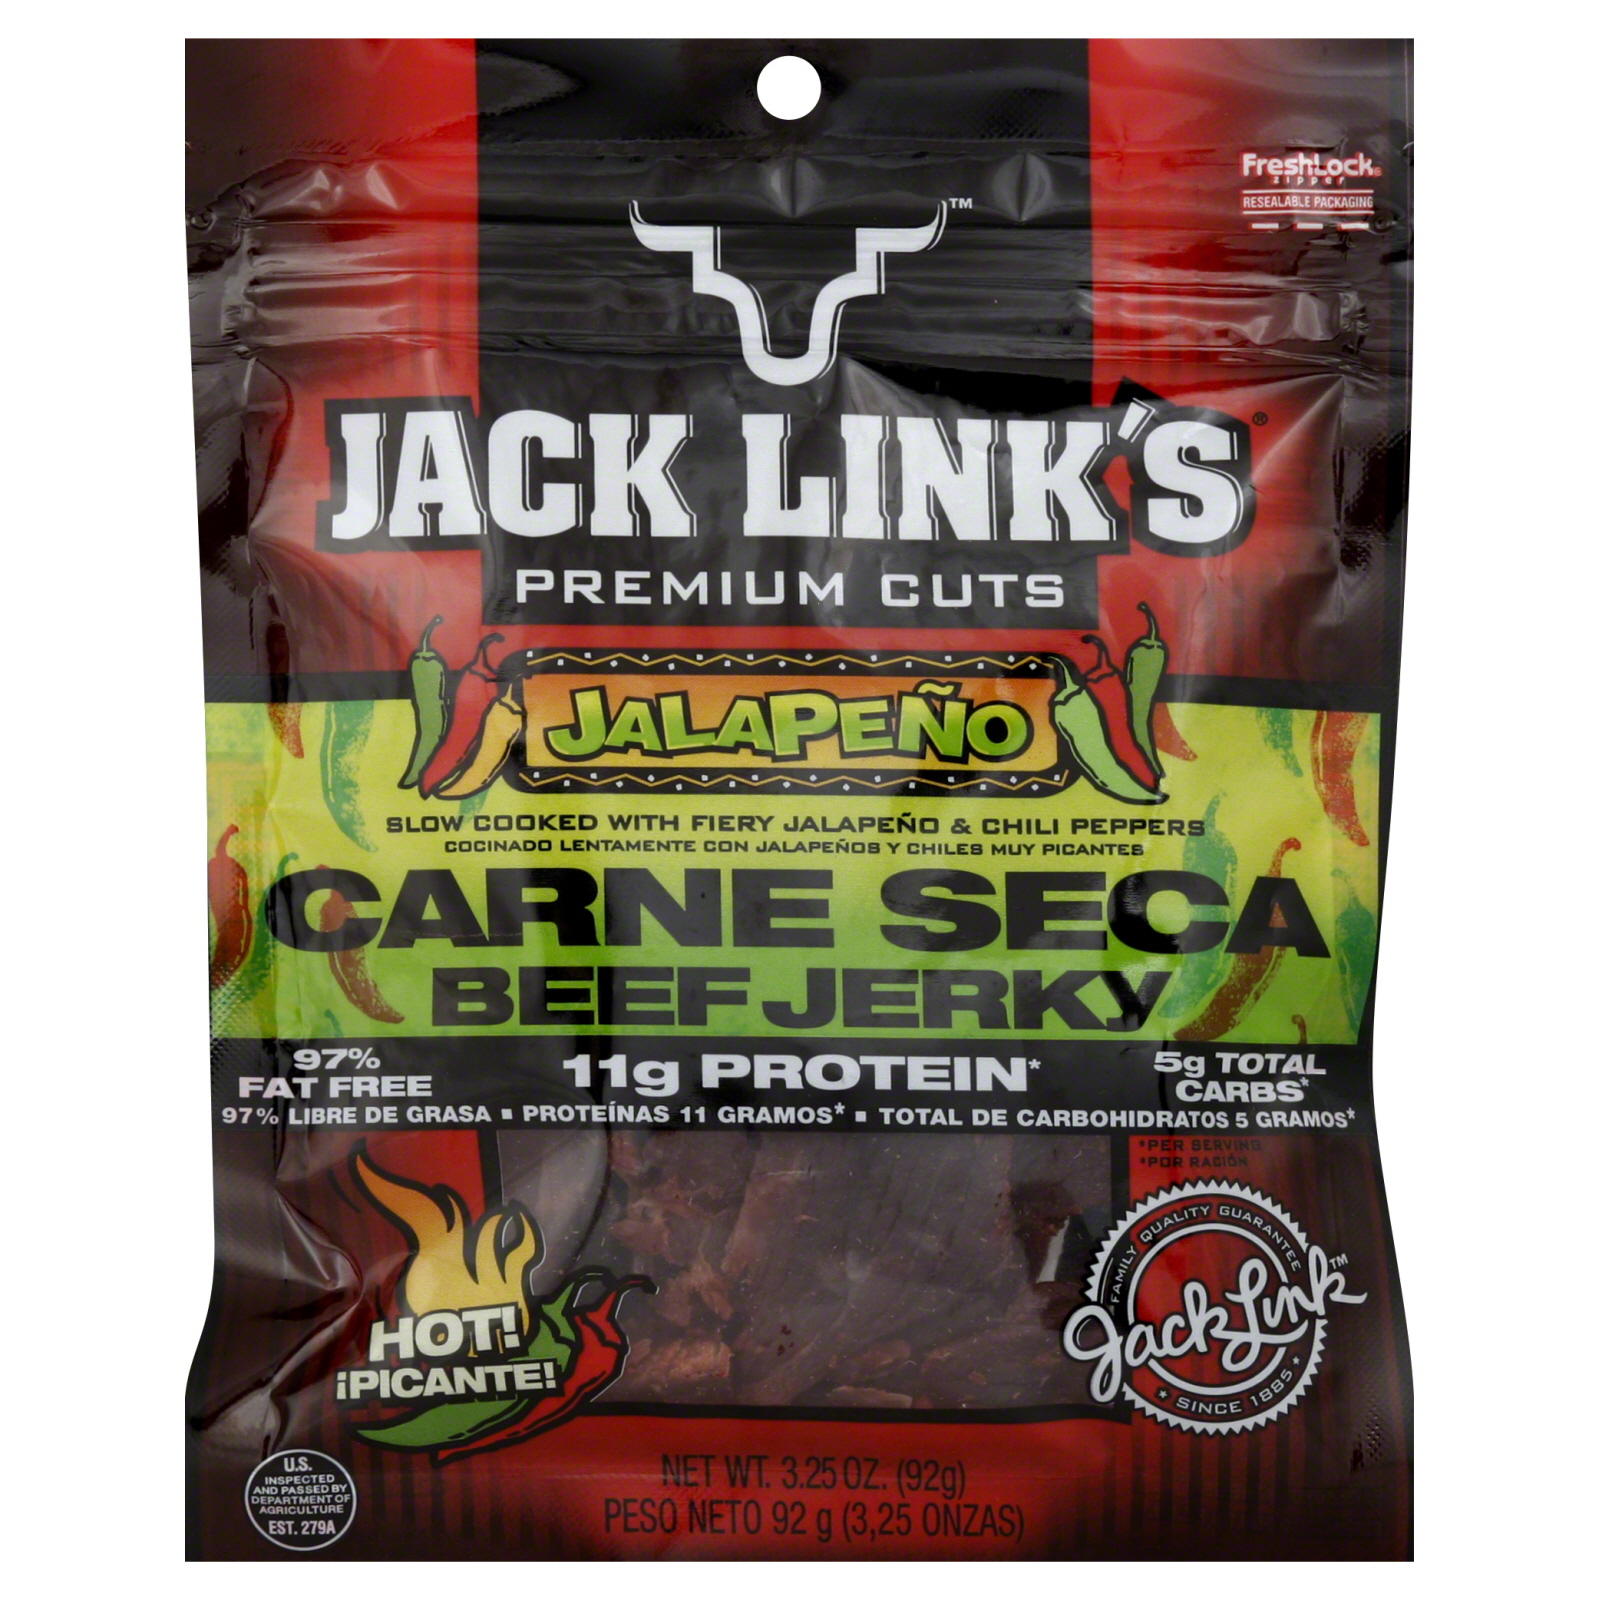 Jack Link's Premium Cuts Beef Jerky, Jalapeno, 3.25 oz (92 g)